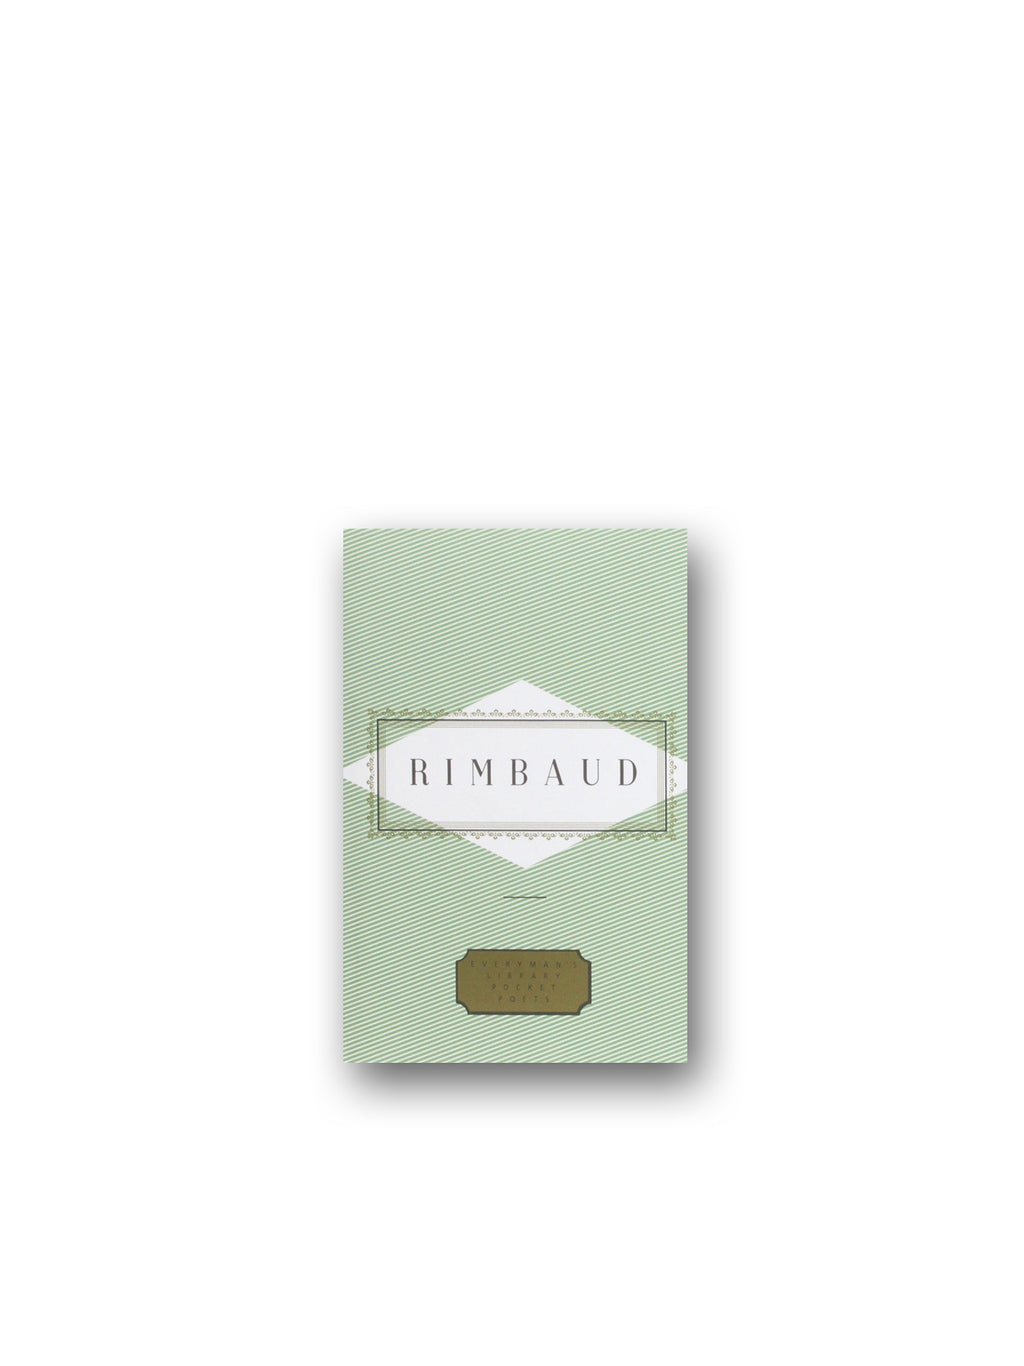 Rimbaud Poems - Everyman's Library Pocket Poets